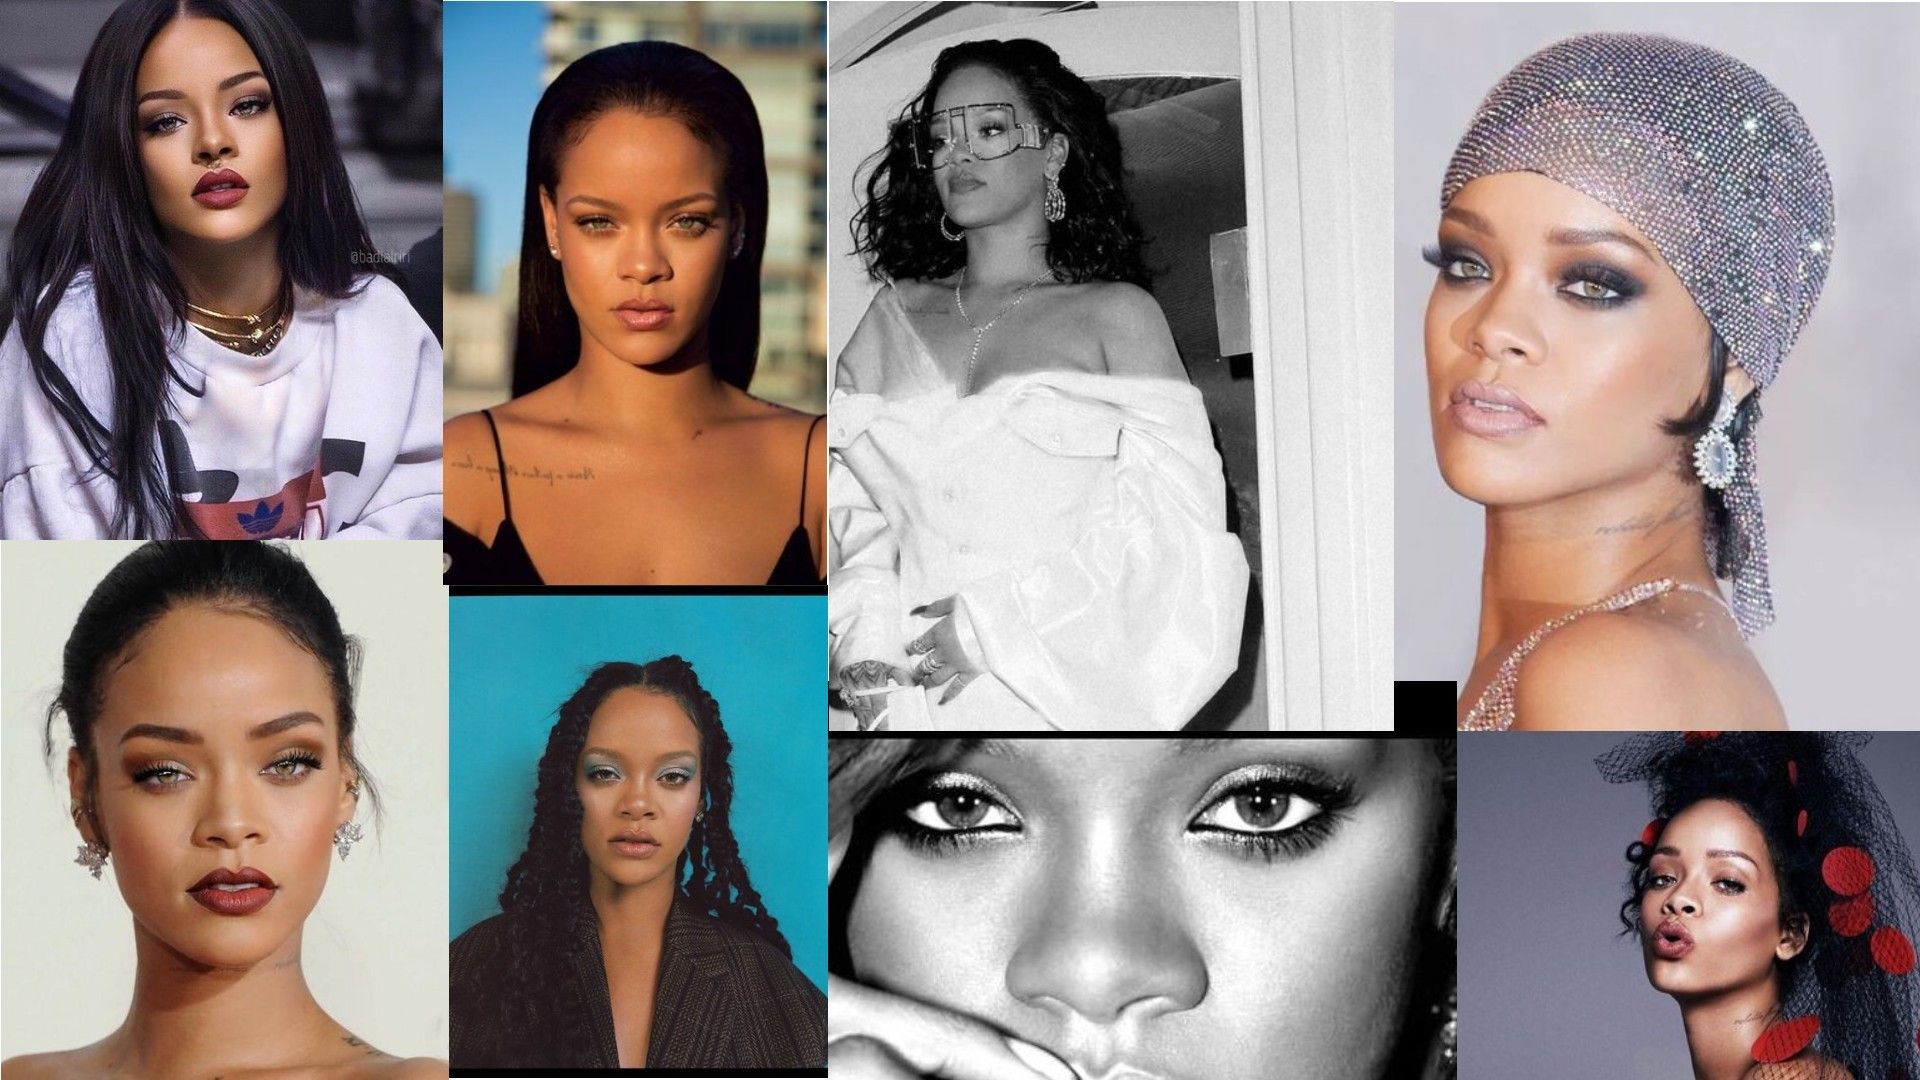 Rihanna laptop wallpaper. Rihanna, Bad and boujee outfits, Laptop wallpaper desktop wallpaper